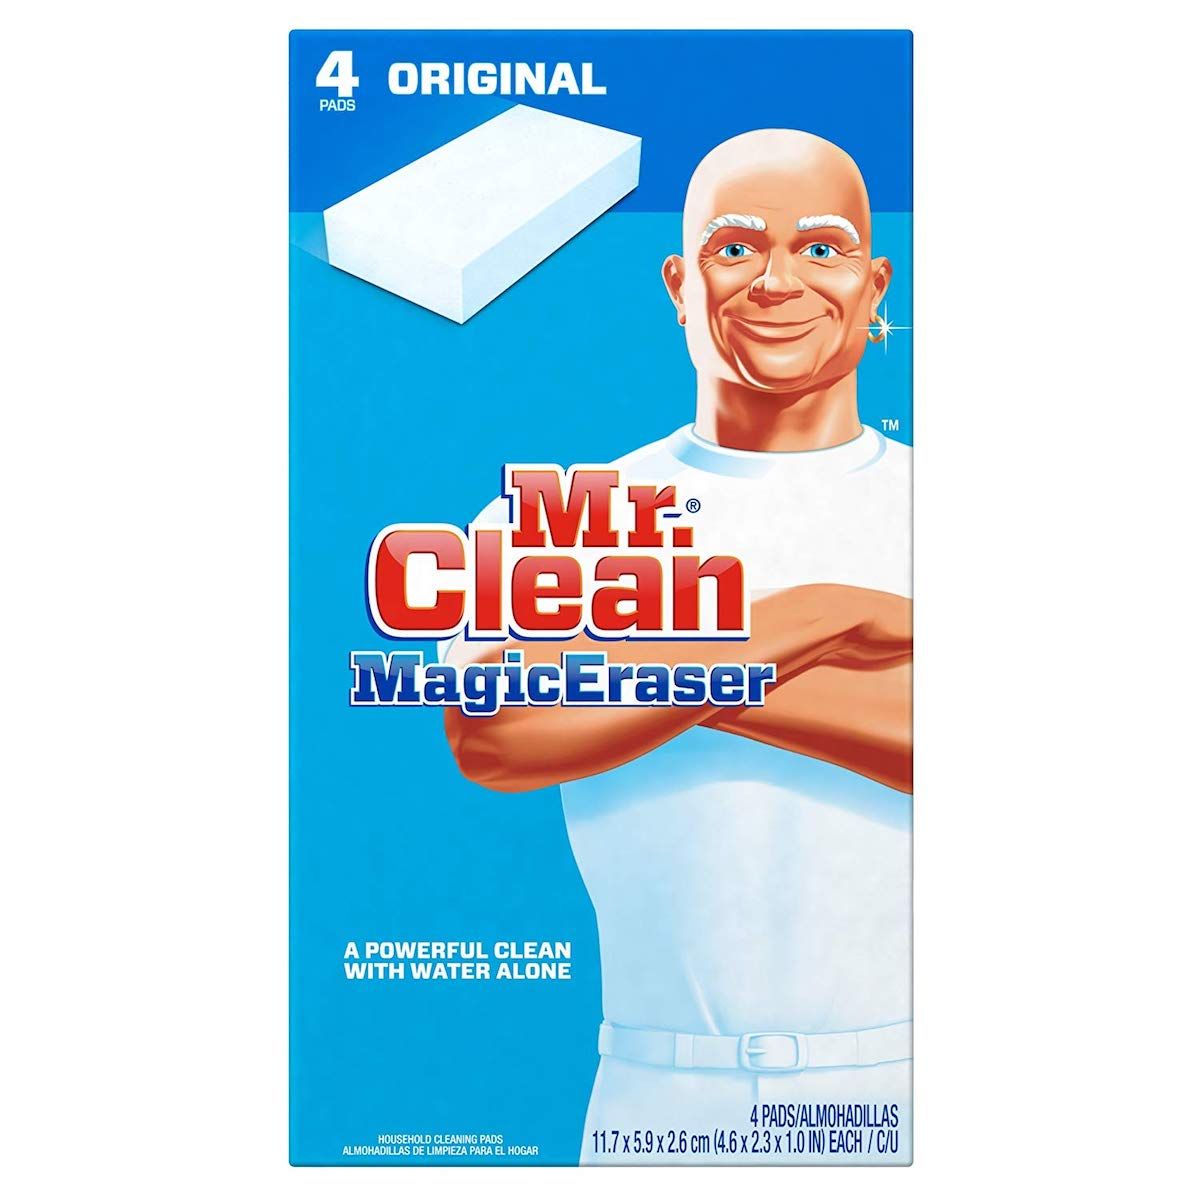 G. Clean Magic Eraser